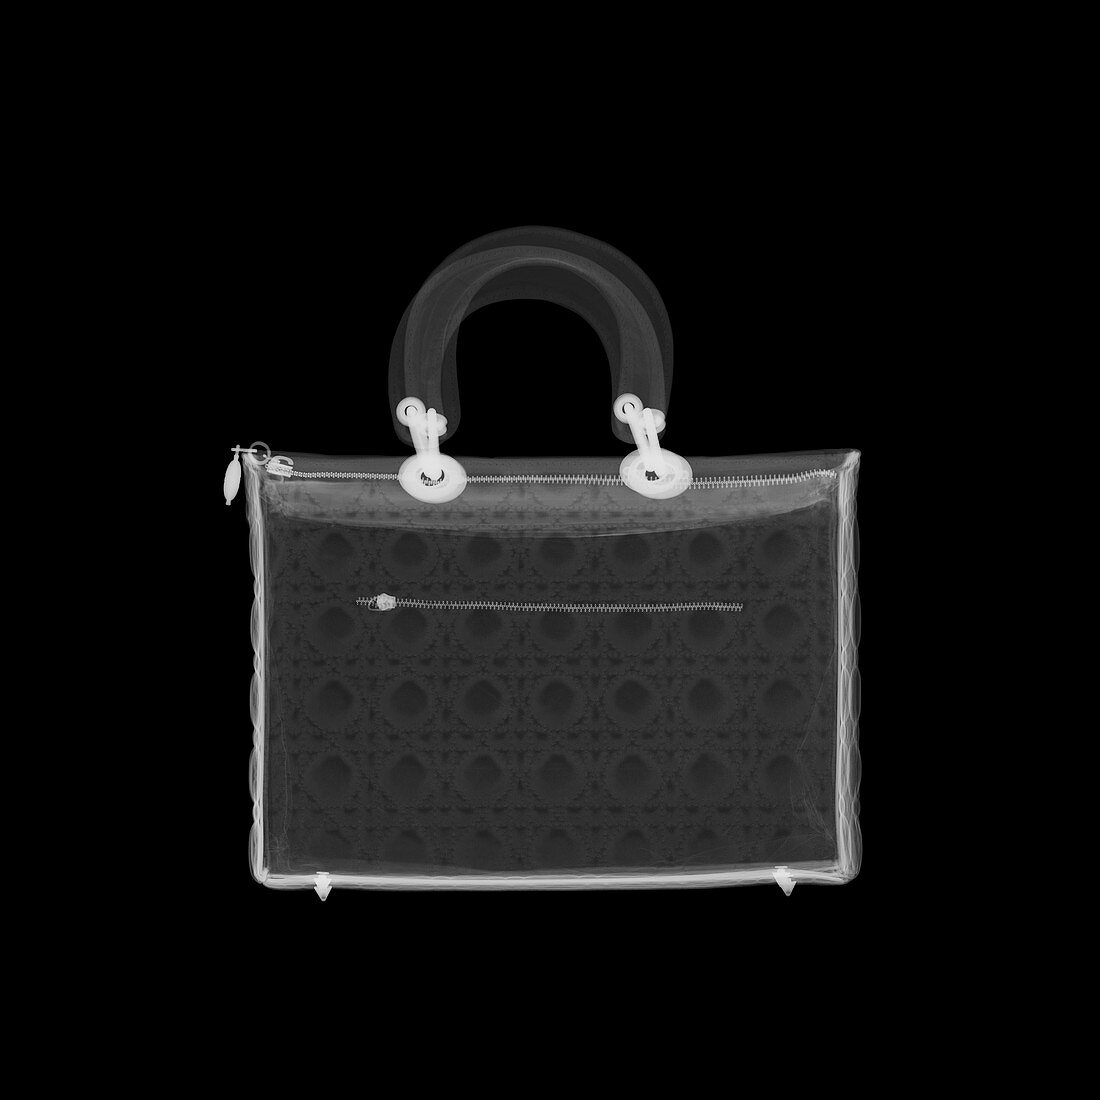 Fashion handbag, X-ray